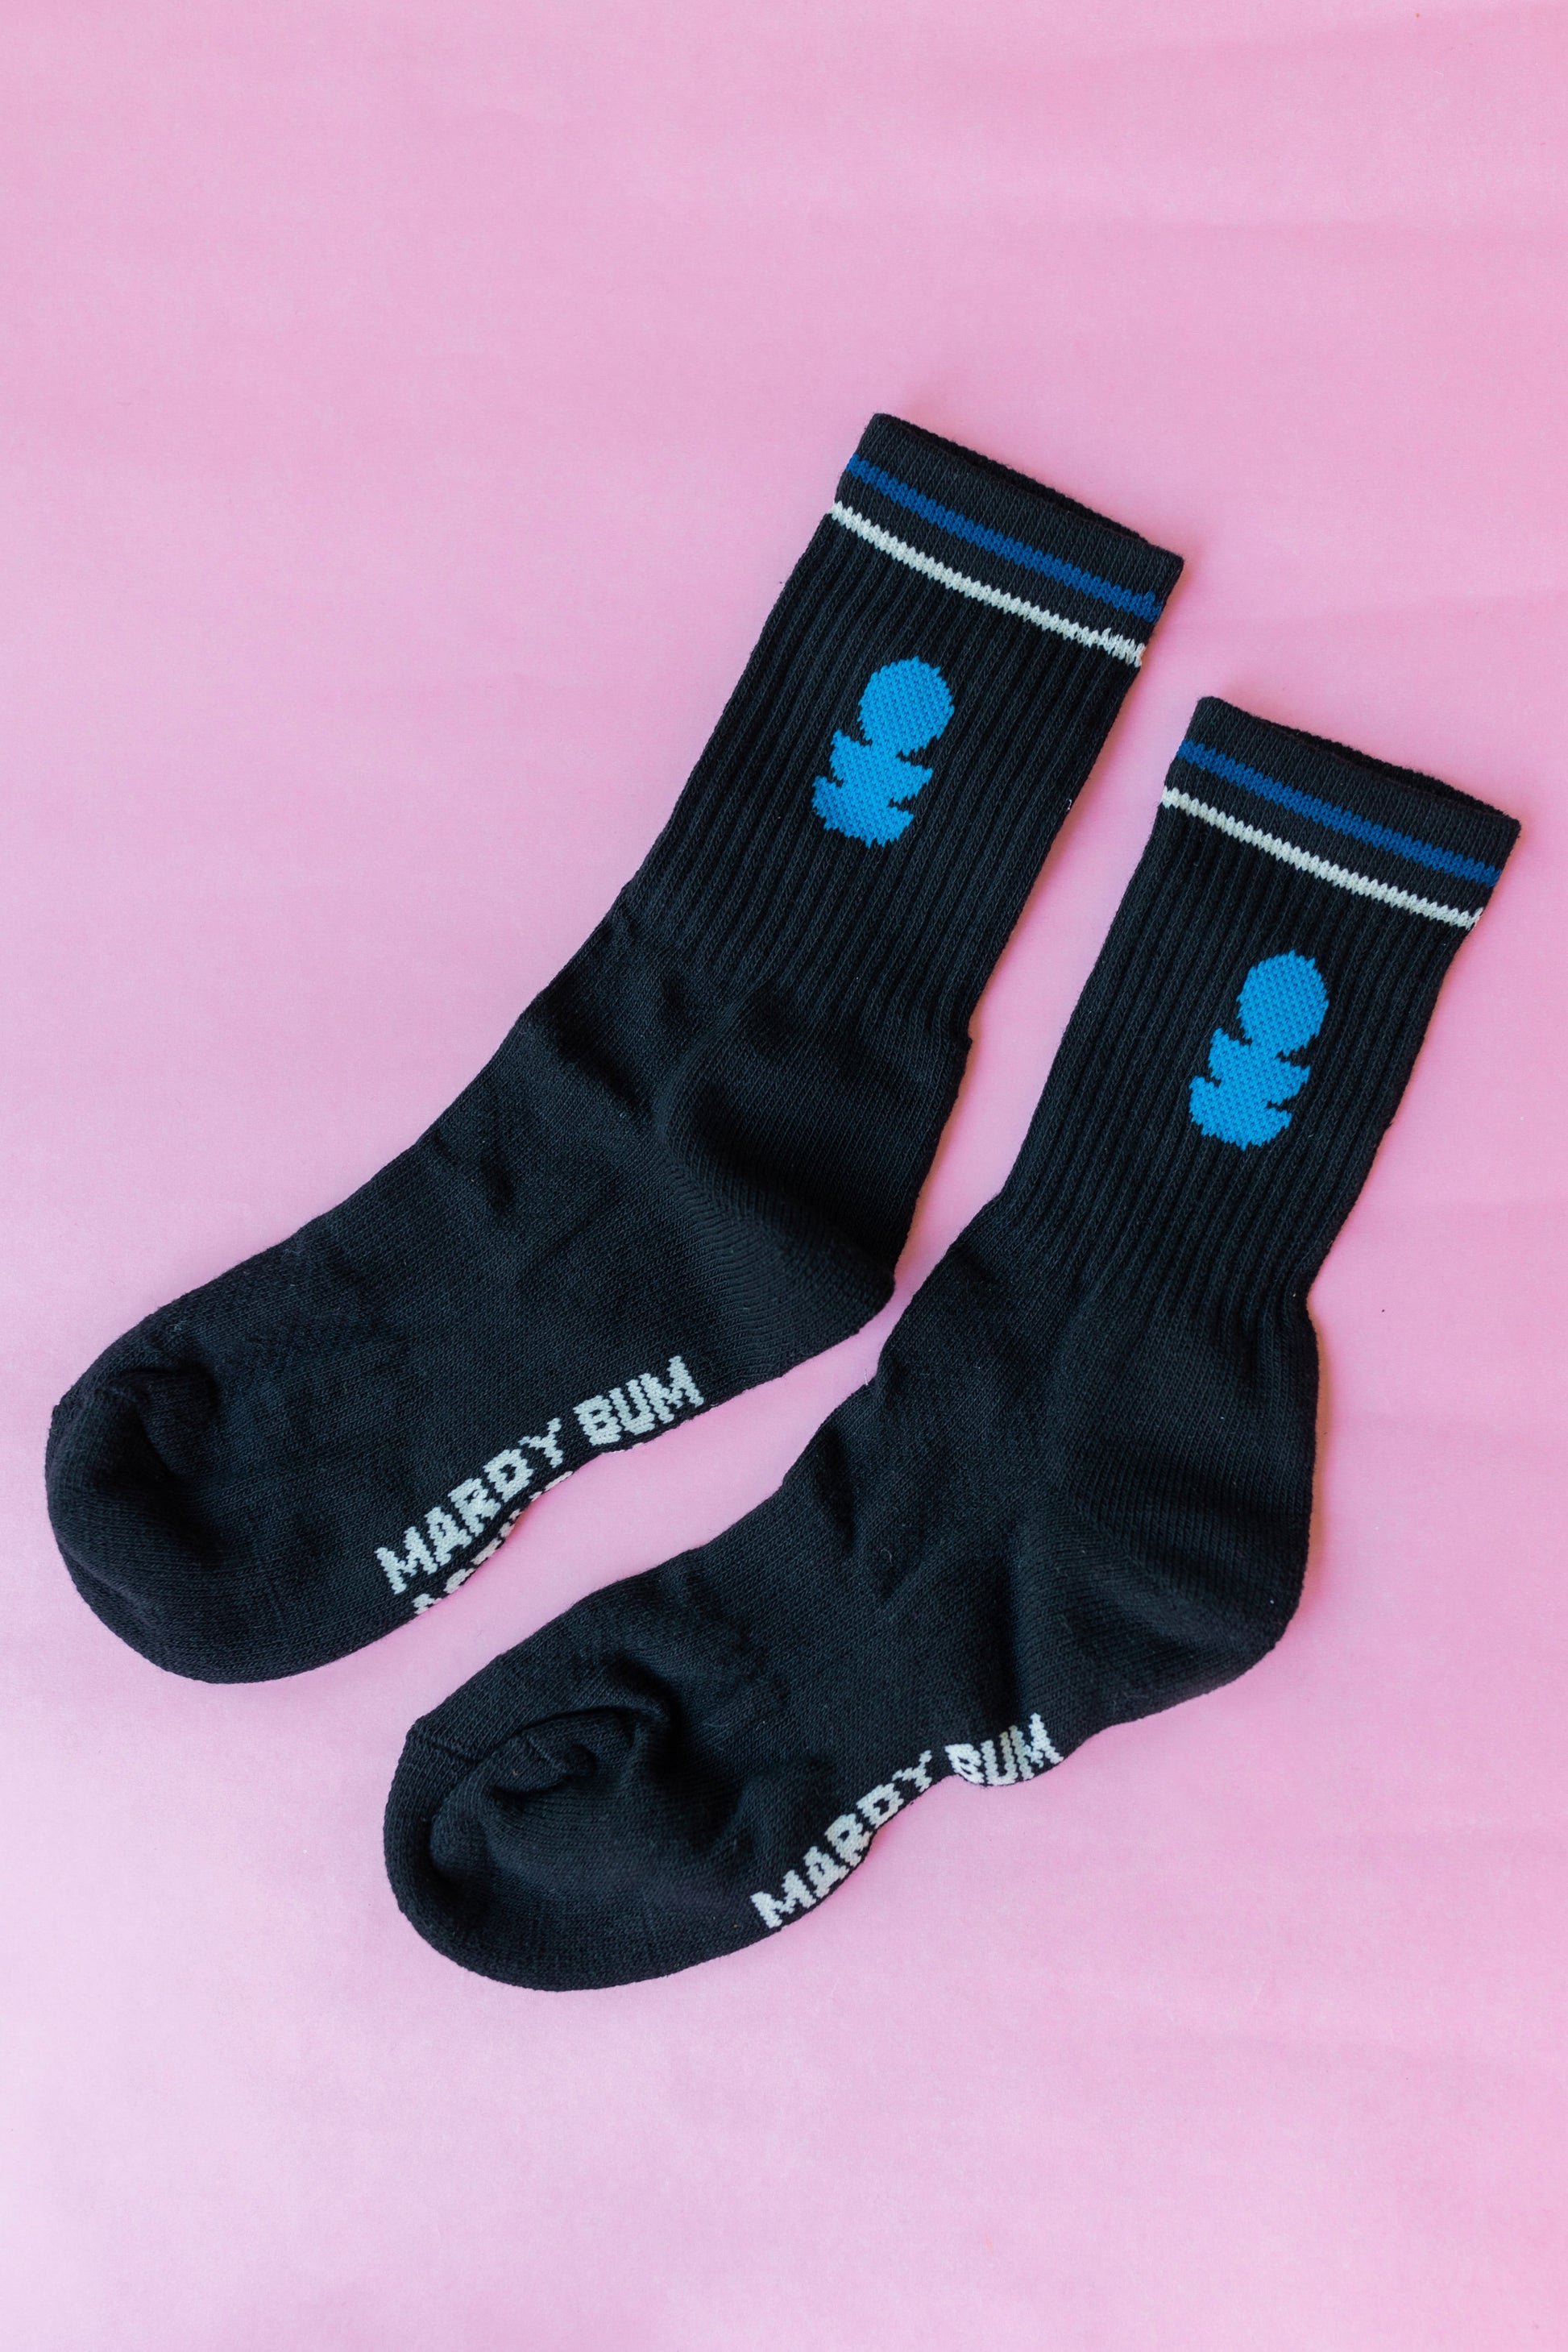 Black and Blue Sports Socks